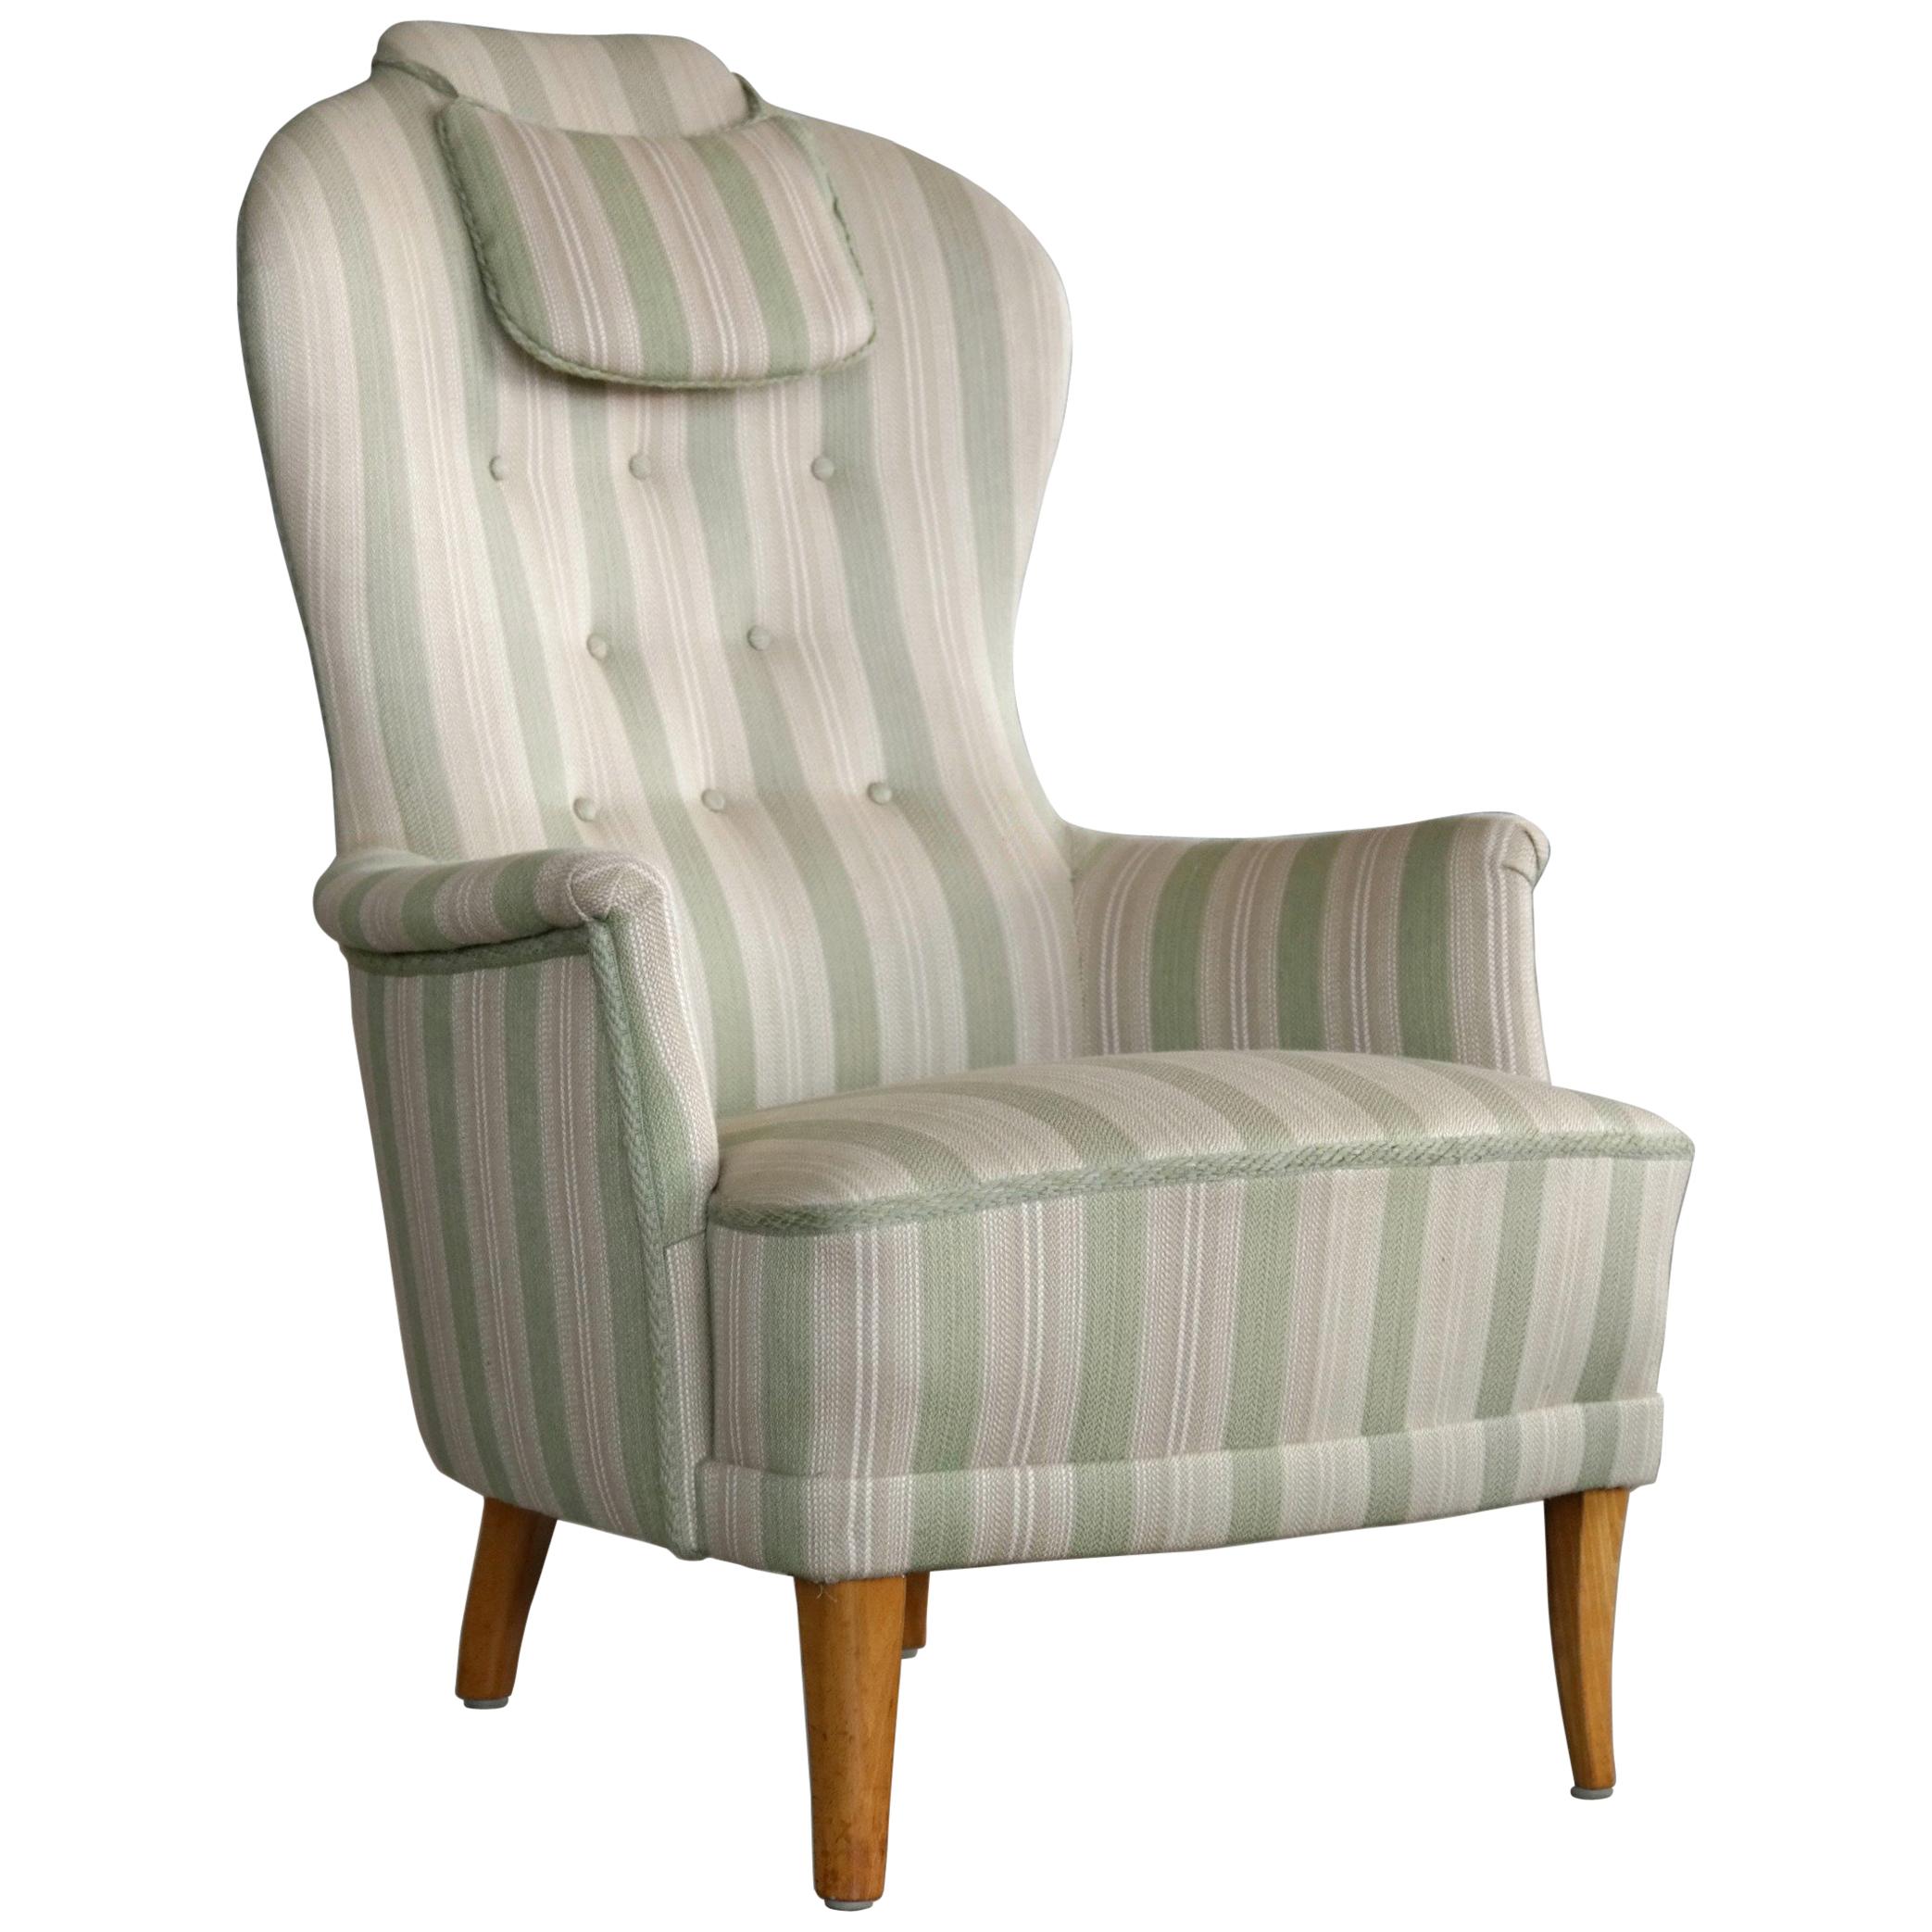 Carl Malmsten Model 'Farmor' Lounge Chair Scandinavian Midcentury